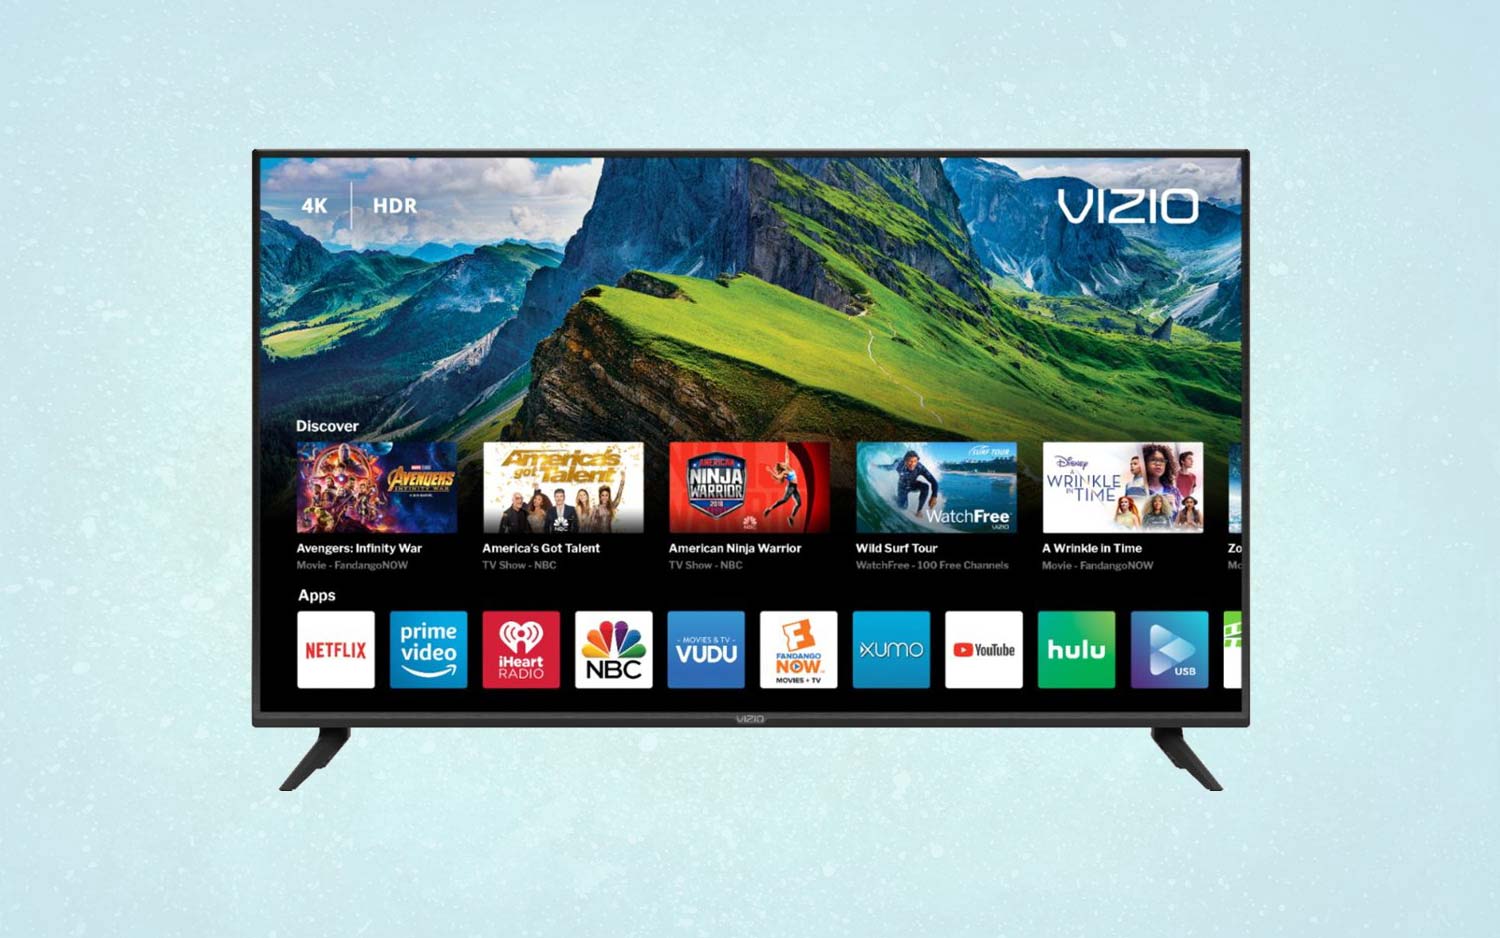 Vizio V Series 50 Inch 4k Hdr Smart Tv V505 G9 Full Review And Benchmarks Tom S Guide